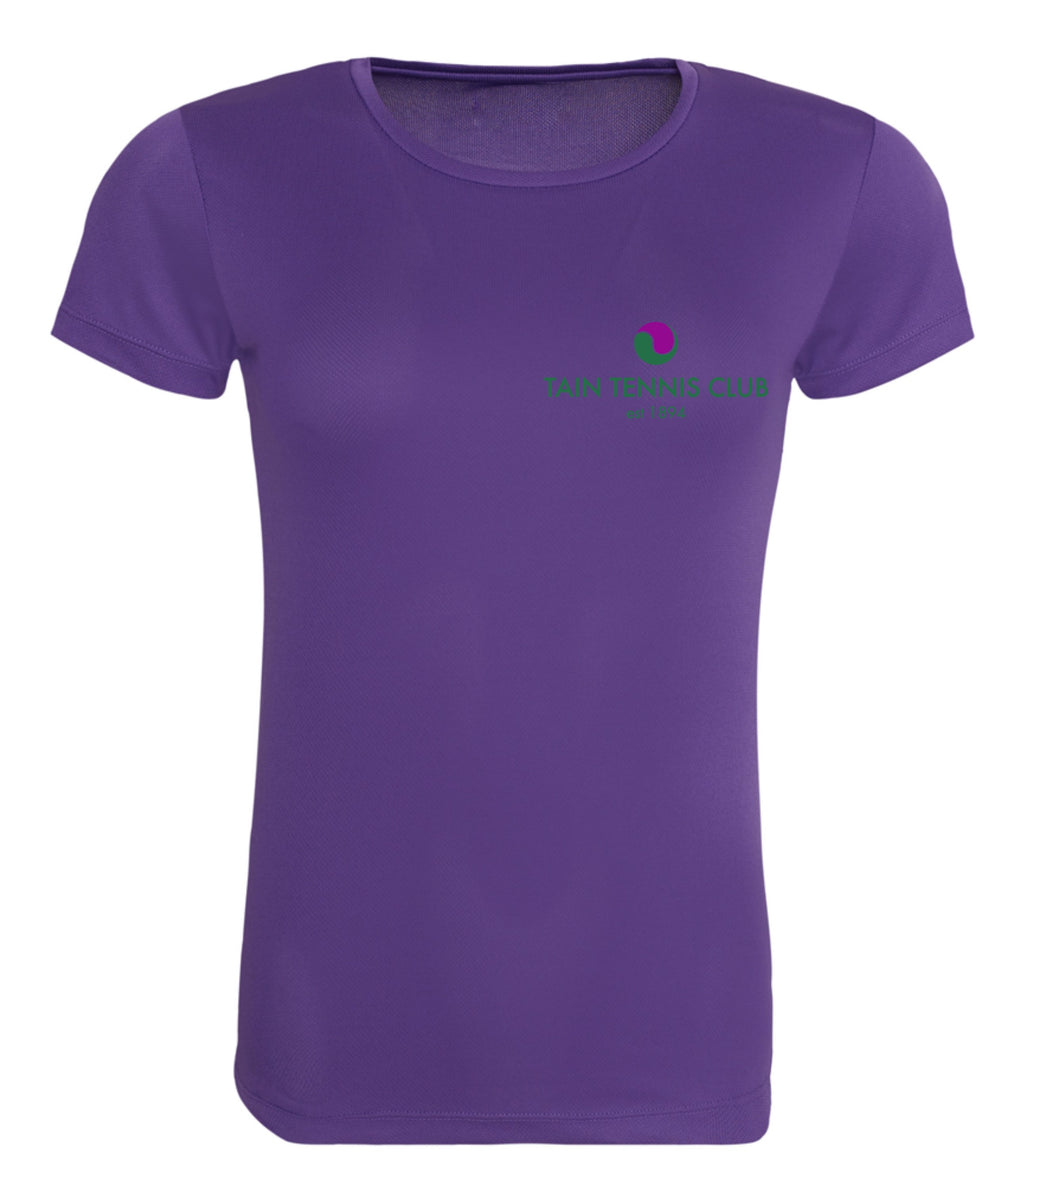 Tain Tennis Club Women's Purple T-shirt JC005M